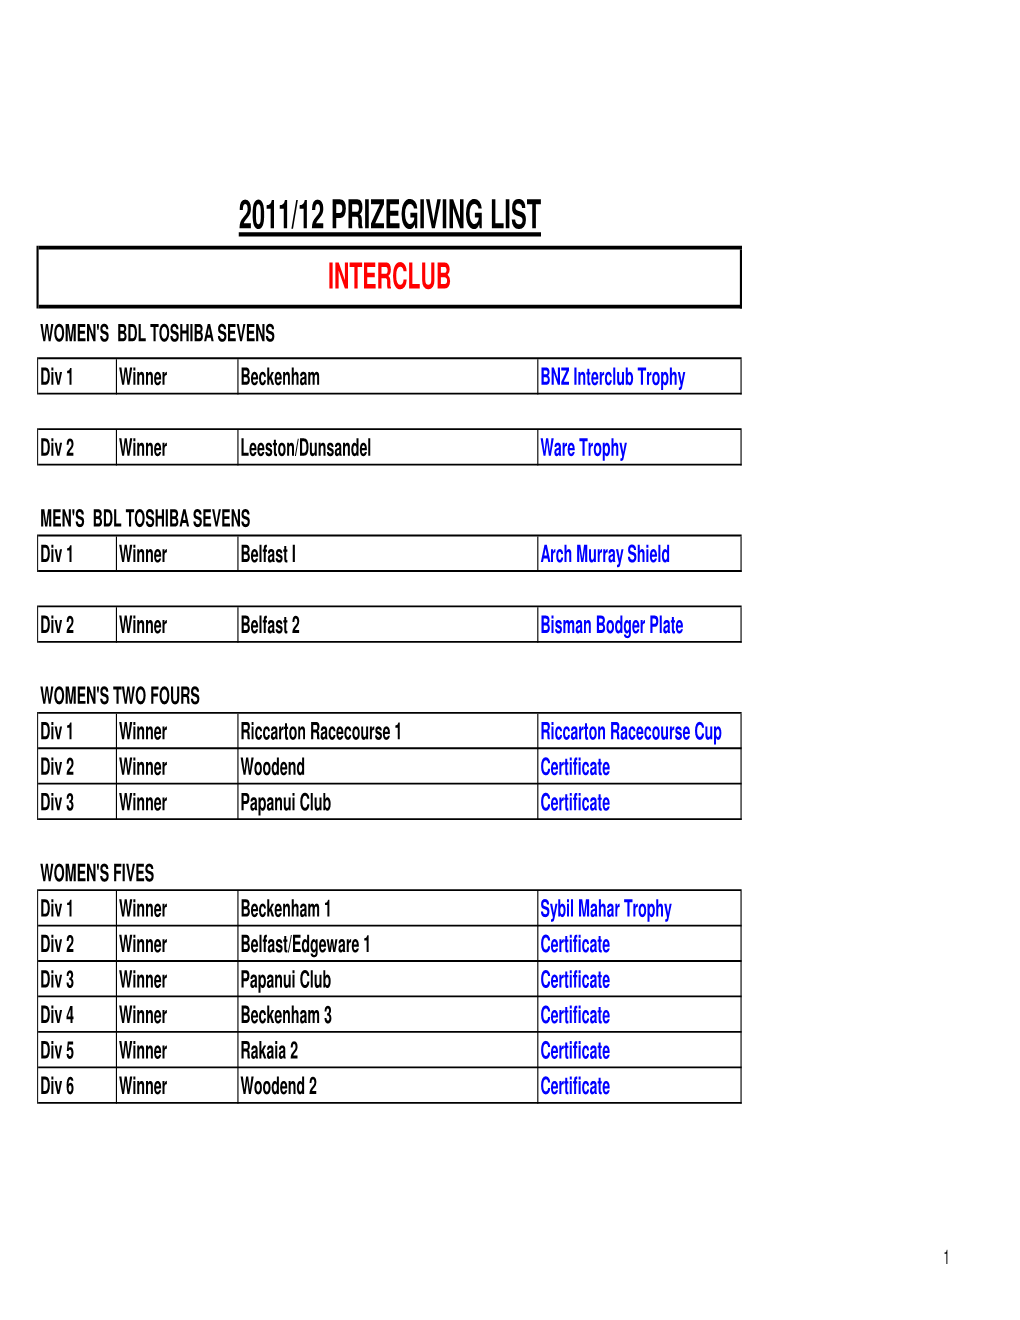 Prize List 2011-12 Website